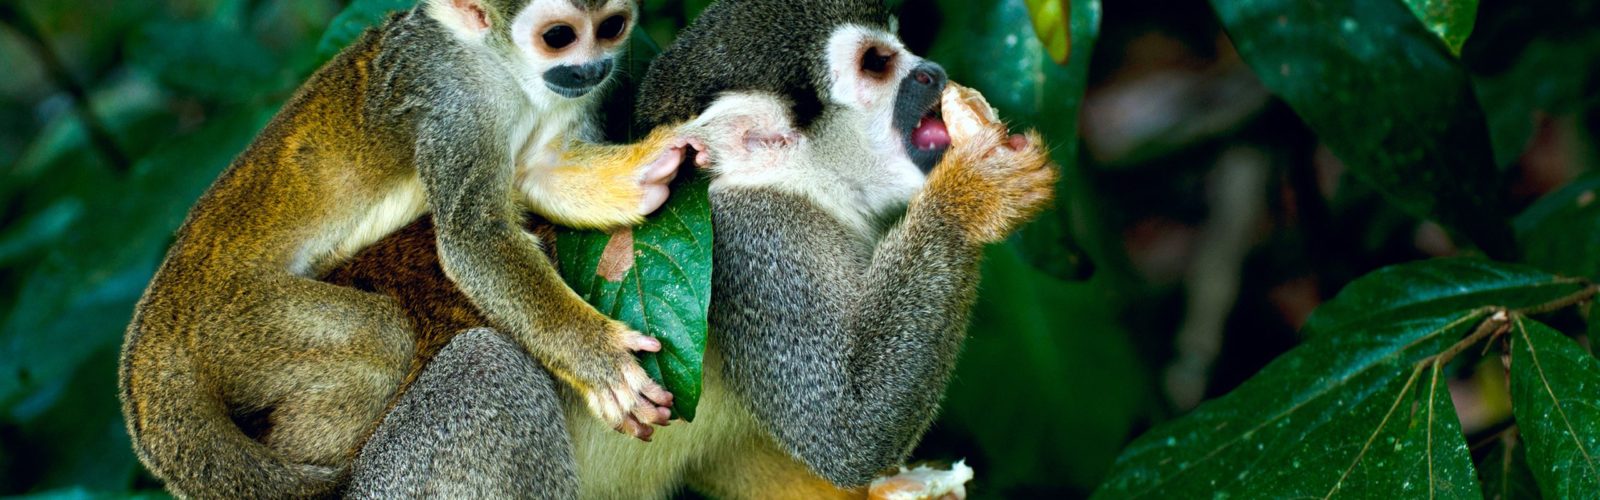 squirrel-monkey-amazon-peru